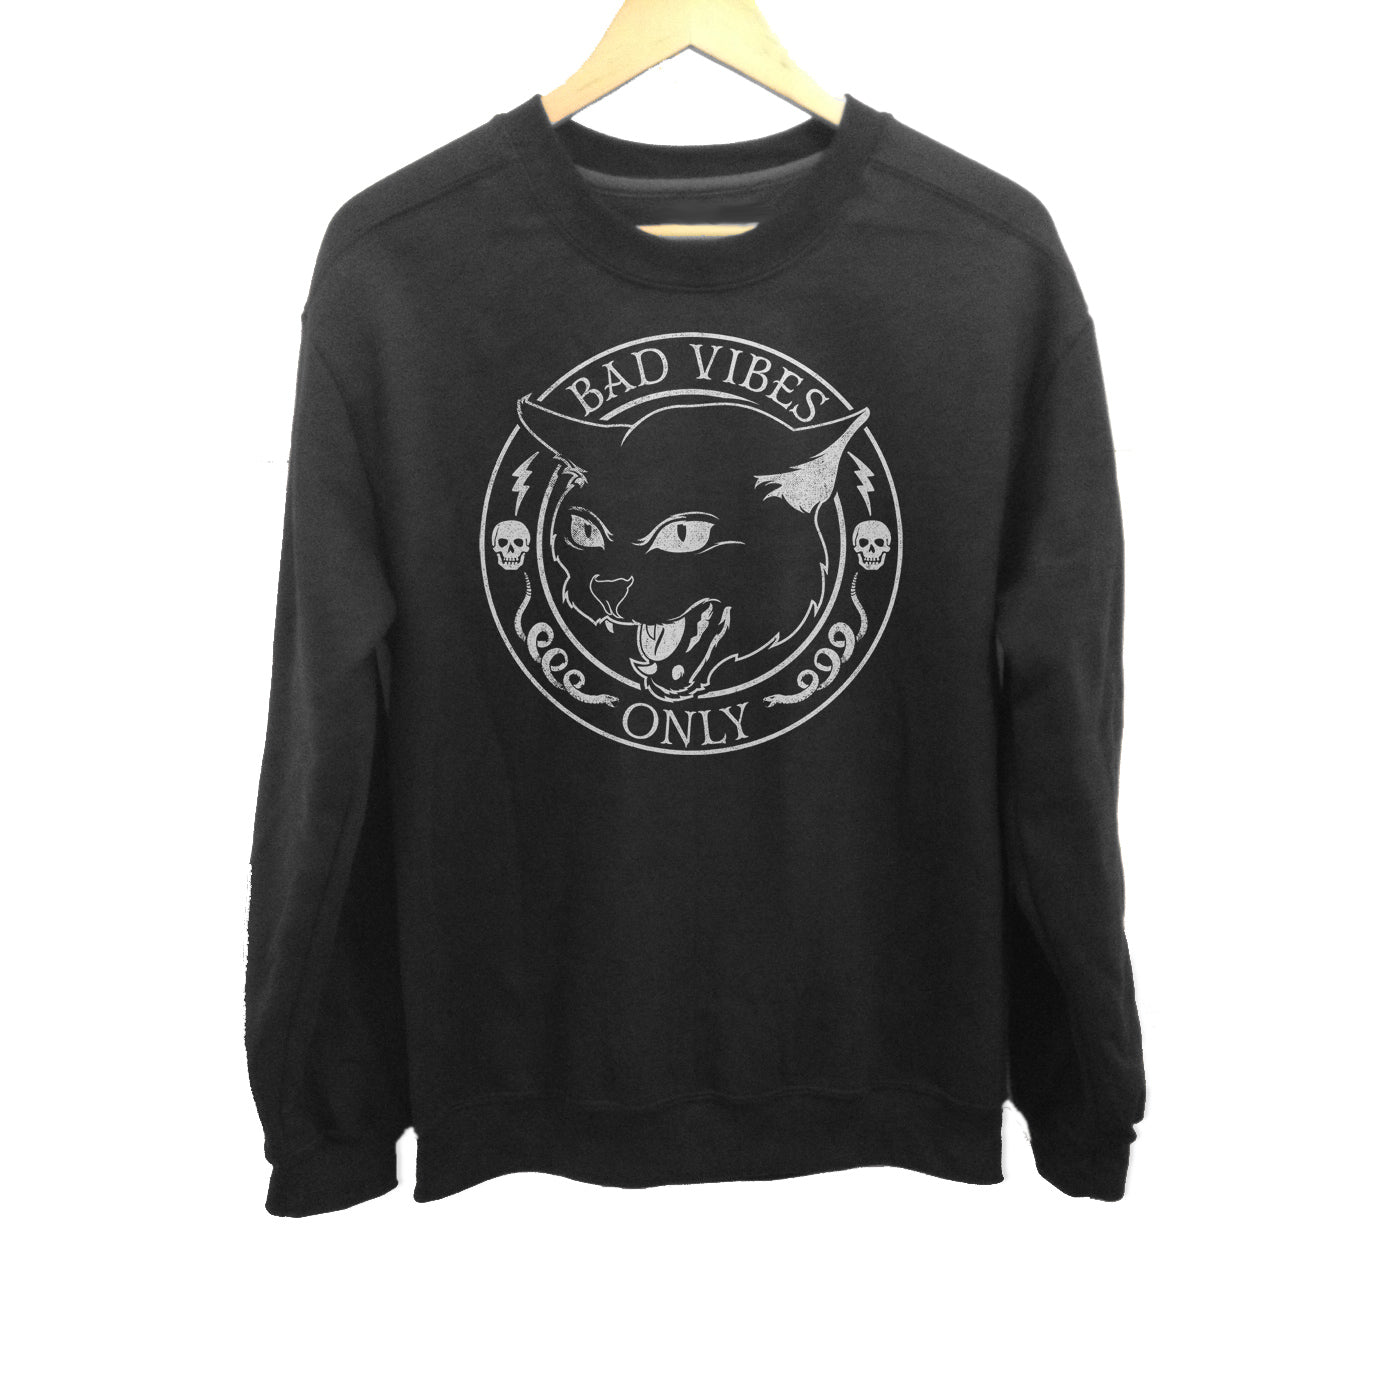 Unisex Bad Vibes Only Sweatshirt - Goth Shirt - Black Cat Shirt